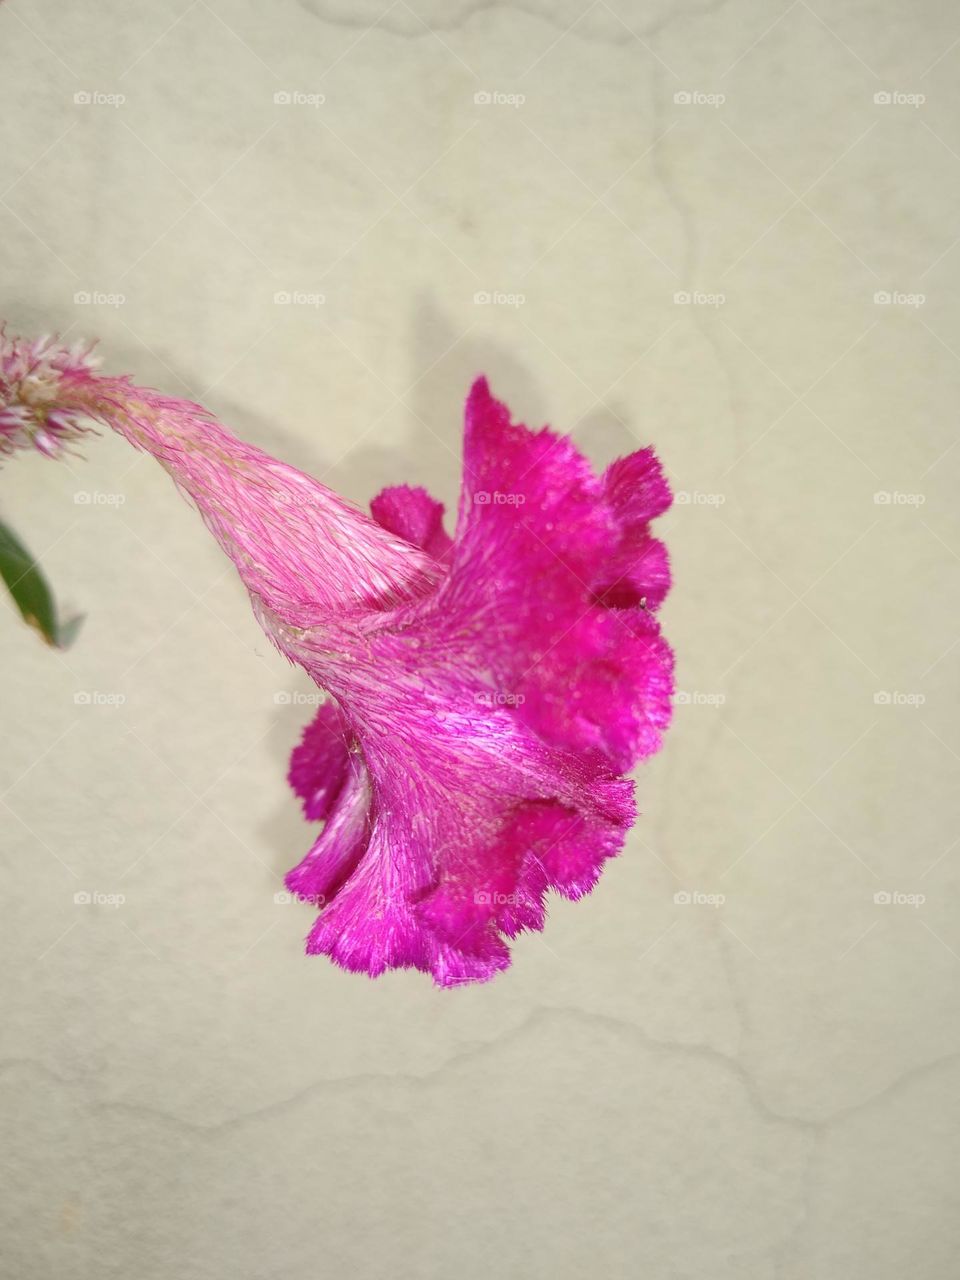 a beautiful pink flower